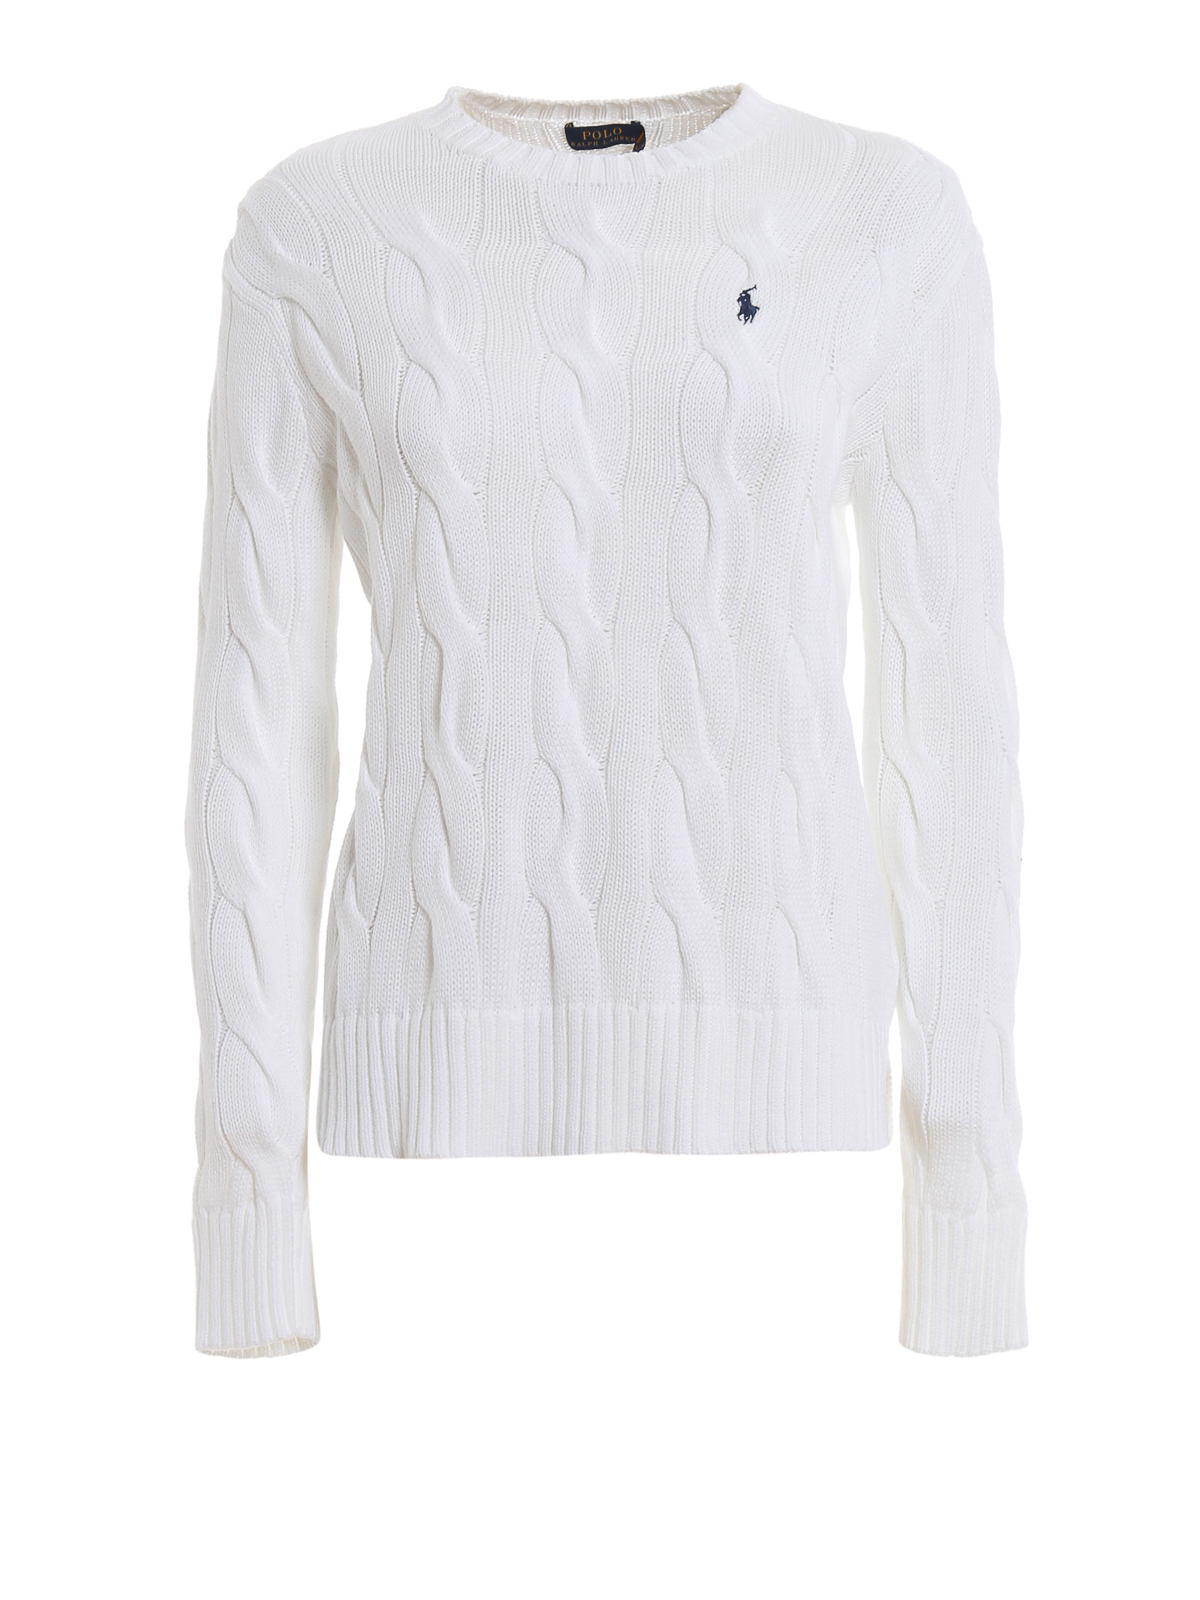 Crew necks Polo Ralph Lauren - Cable knit white cotton sweater -  211706244007